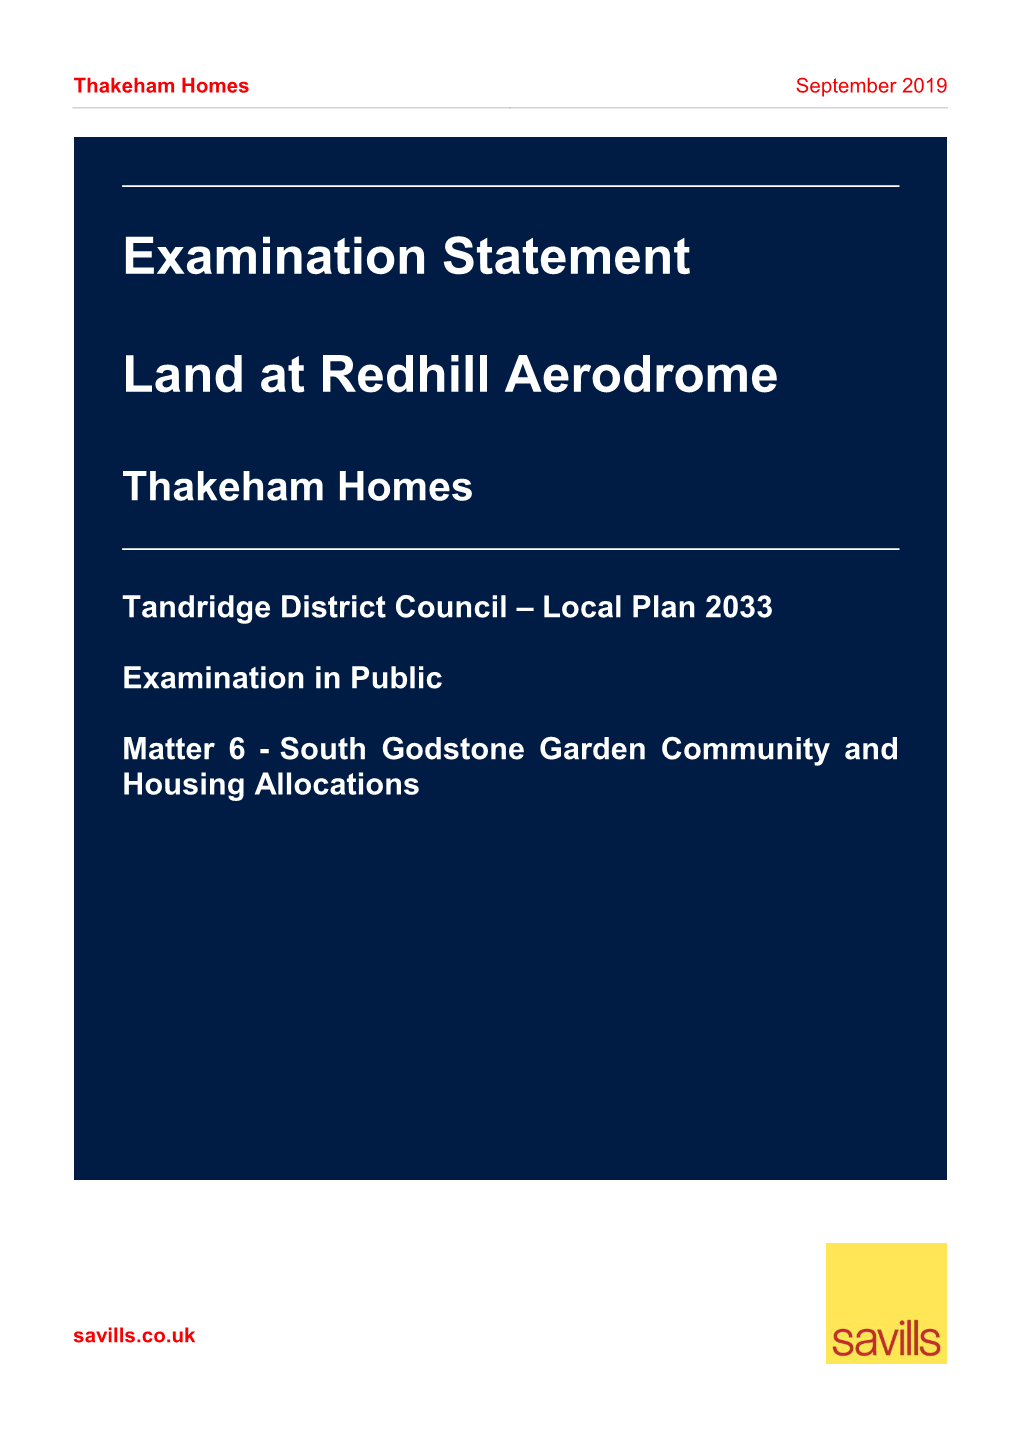 Examination Statement Land at Redhill Aerodrome